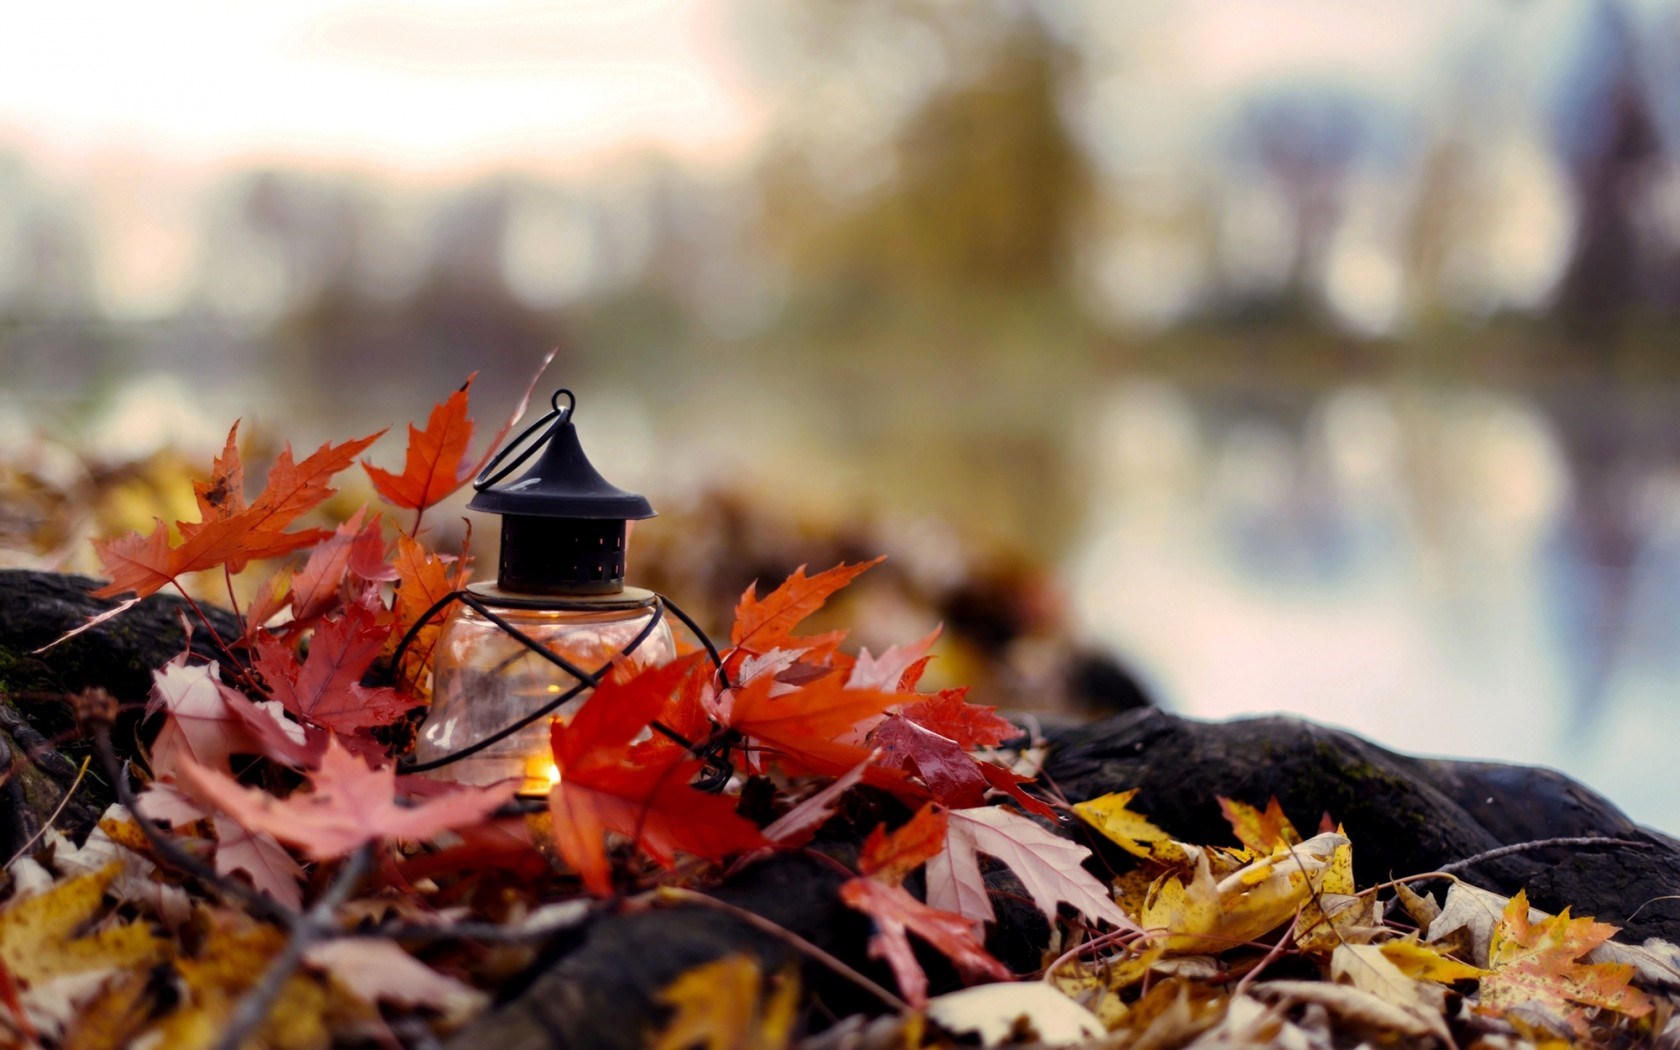 e1zo_lantern-candle-leaves-yellow-autumn-nature-background-1680x1050.jpg